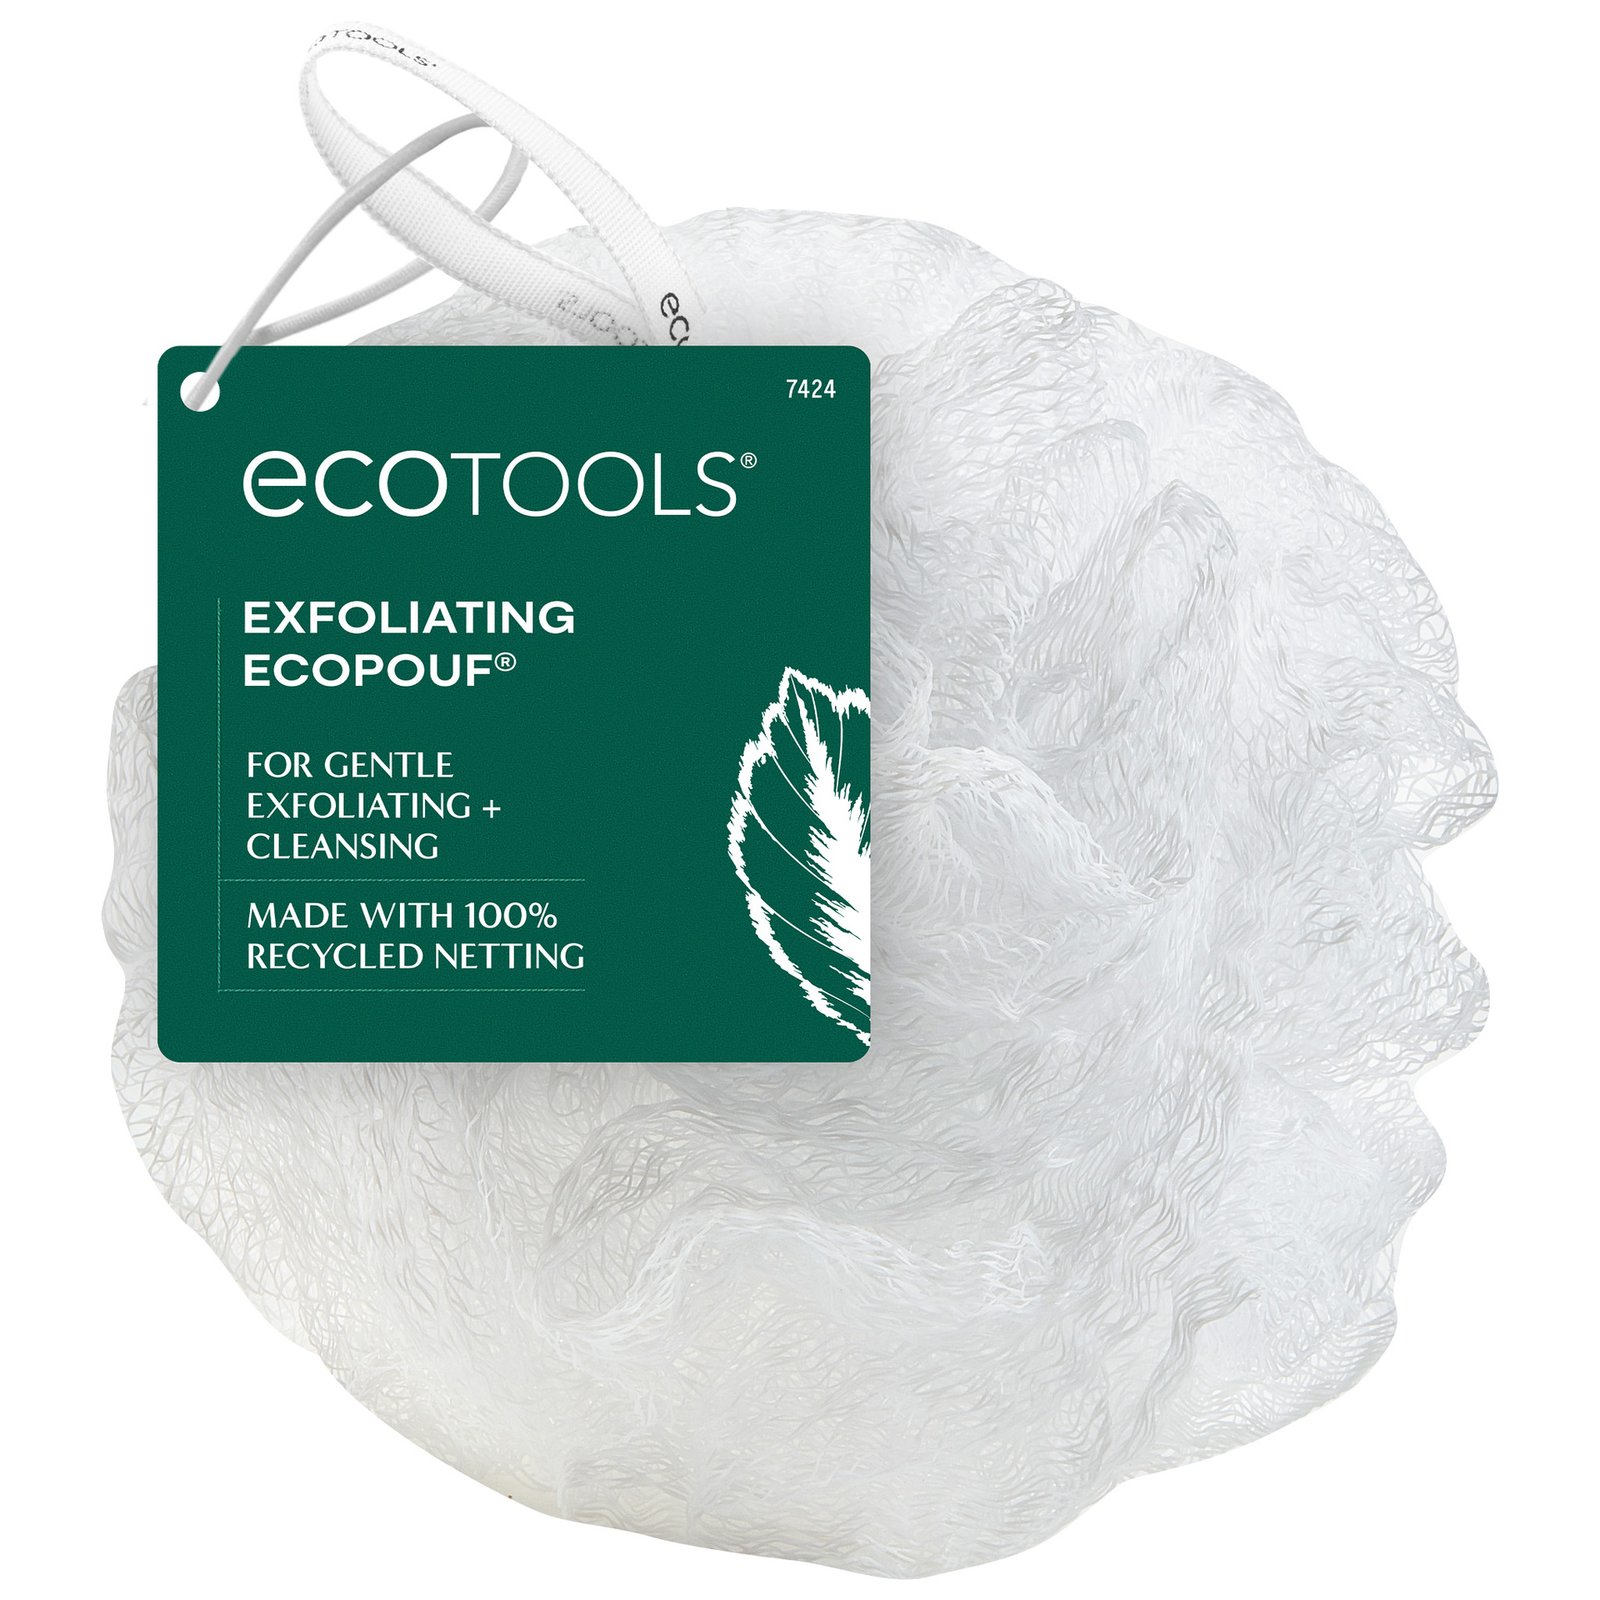 Eco Tools Ecopouf Bath Sponge 1 st